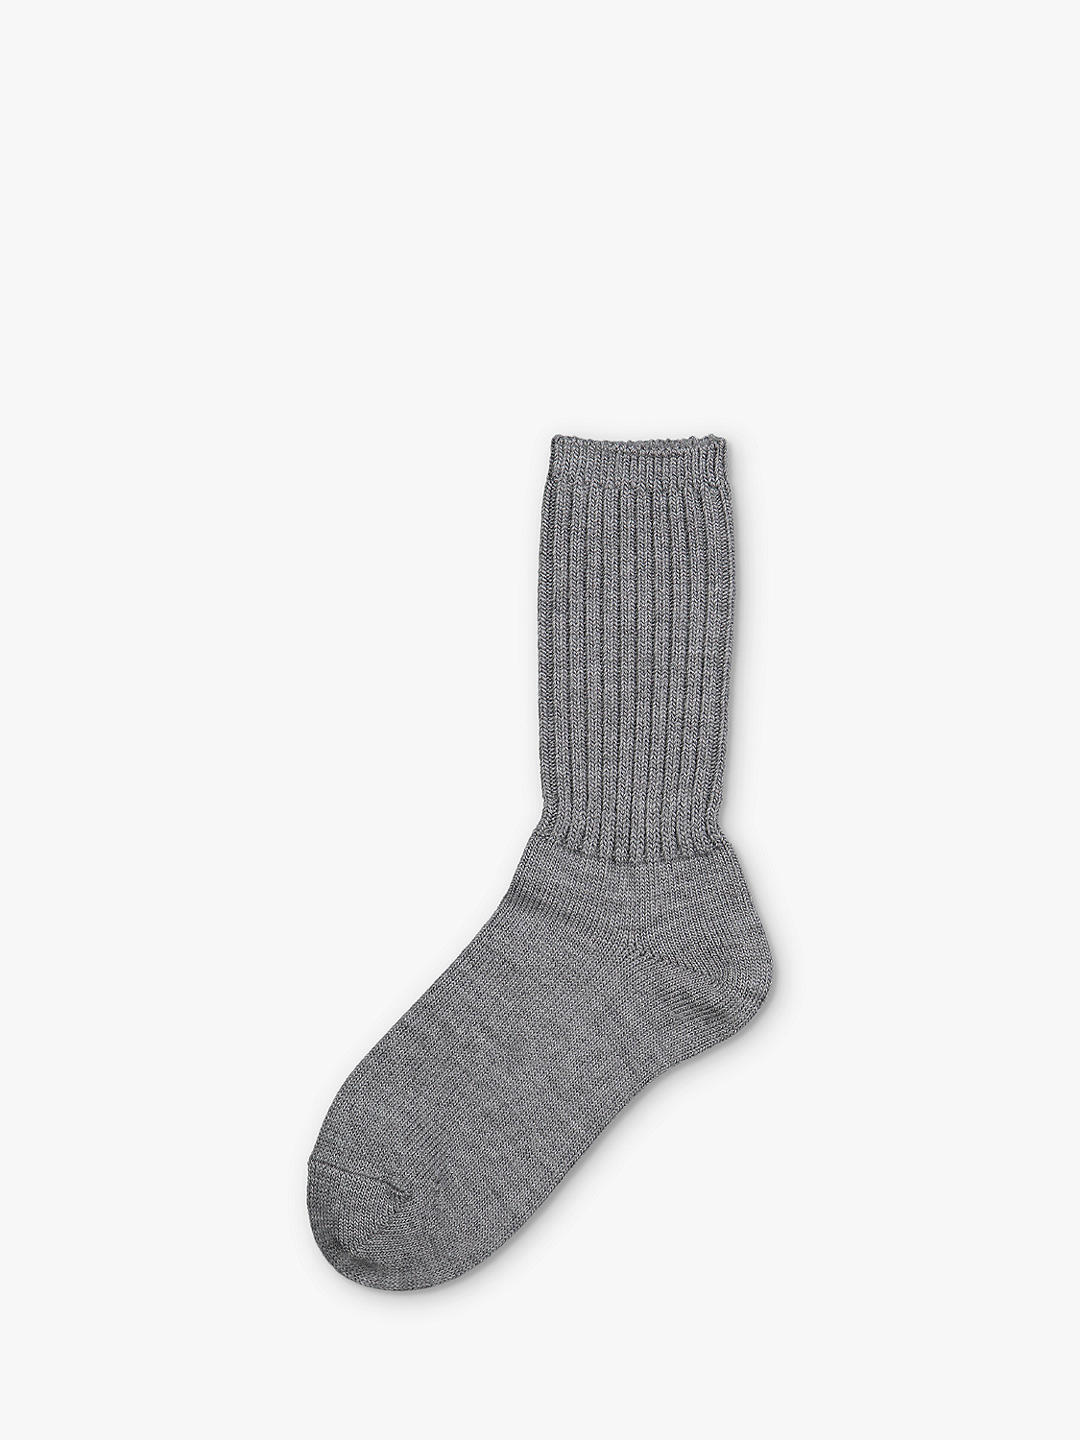 Polarn O. Pyret Baby Thick Wool Socks, Grey